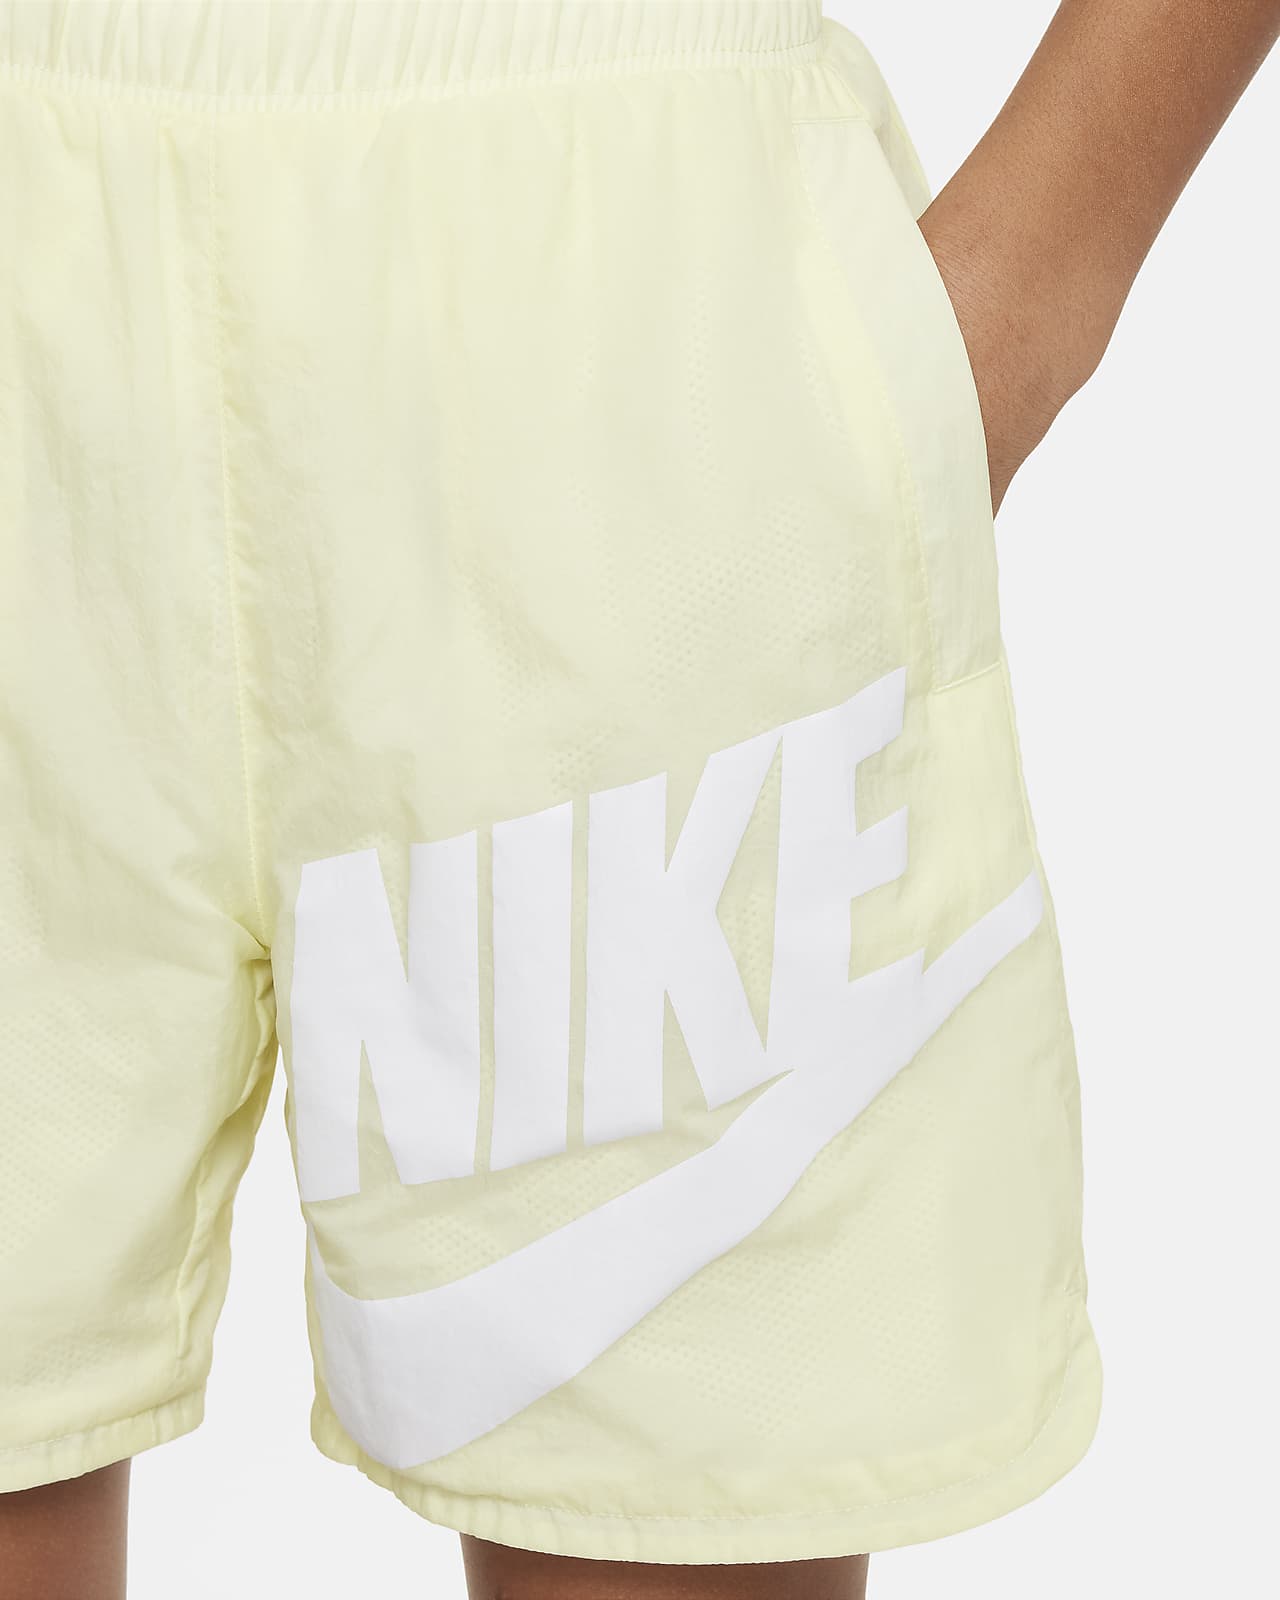 Nike, 2 Piece Shorts Set Infant Boys, Game Royal